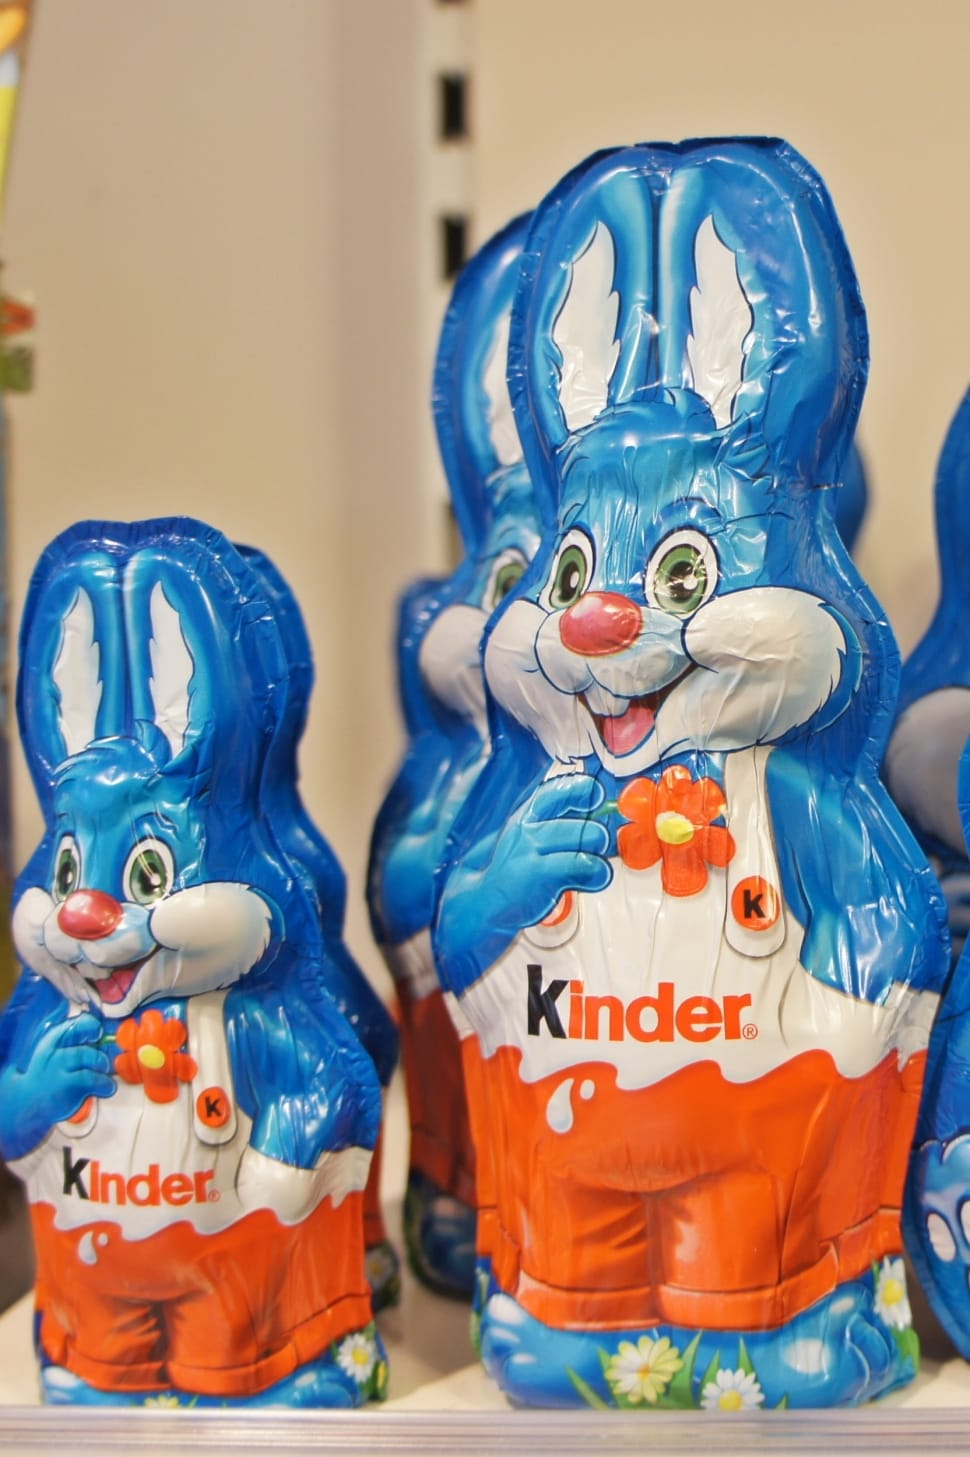 kinder bunny plastic packs preview